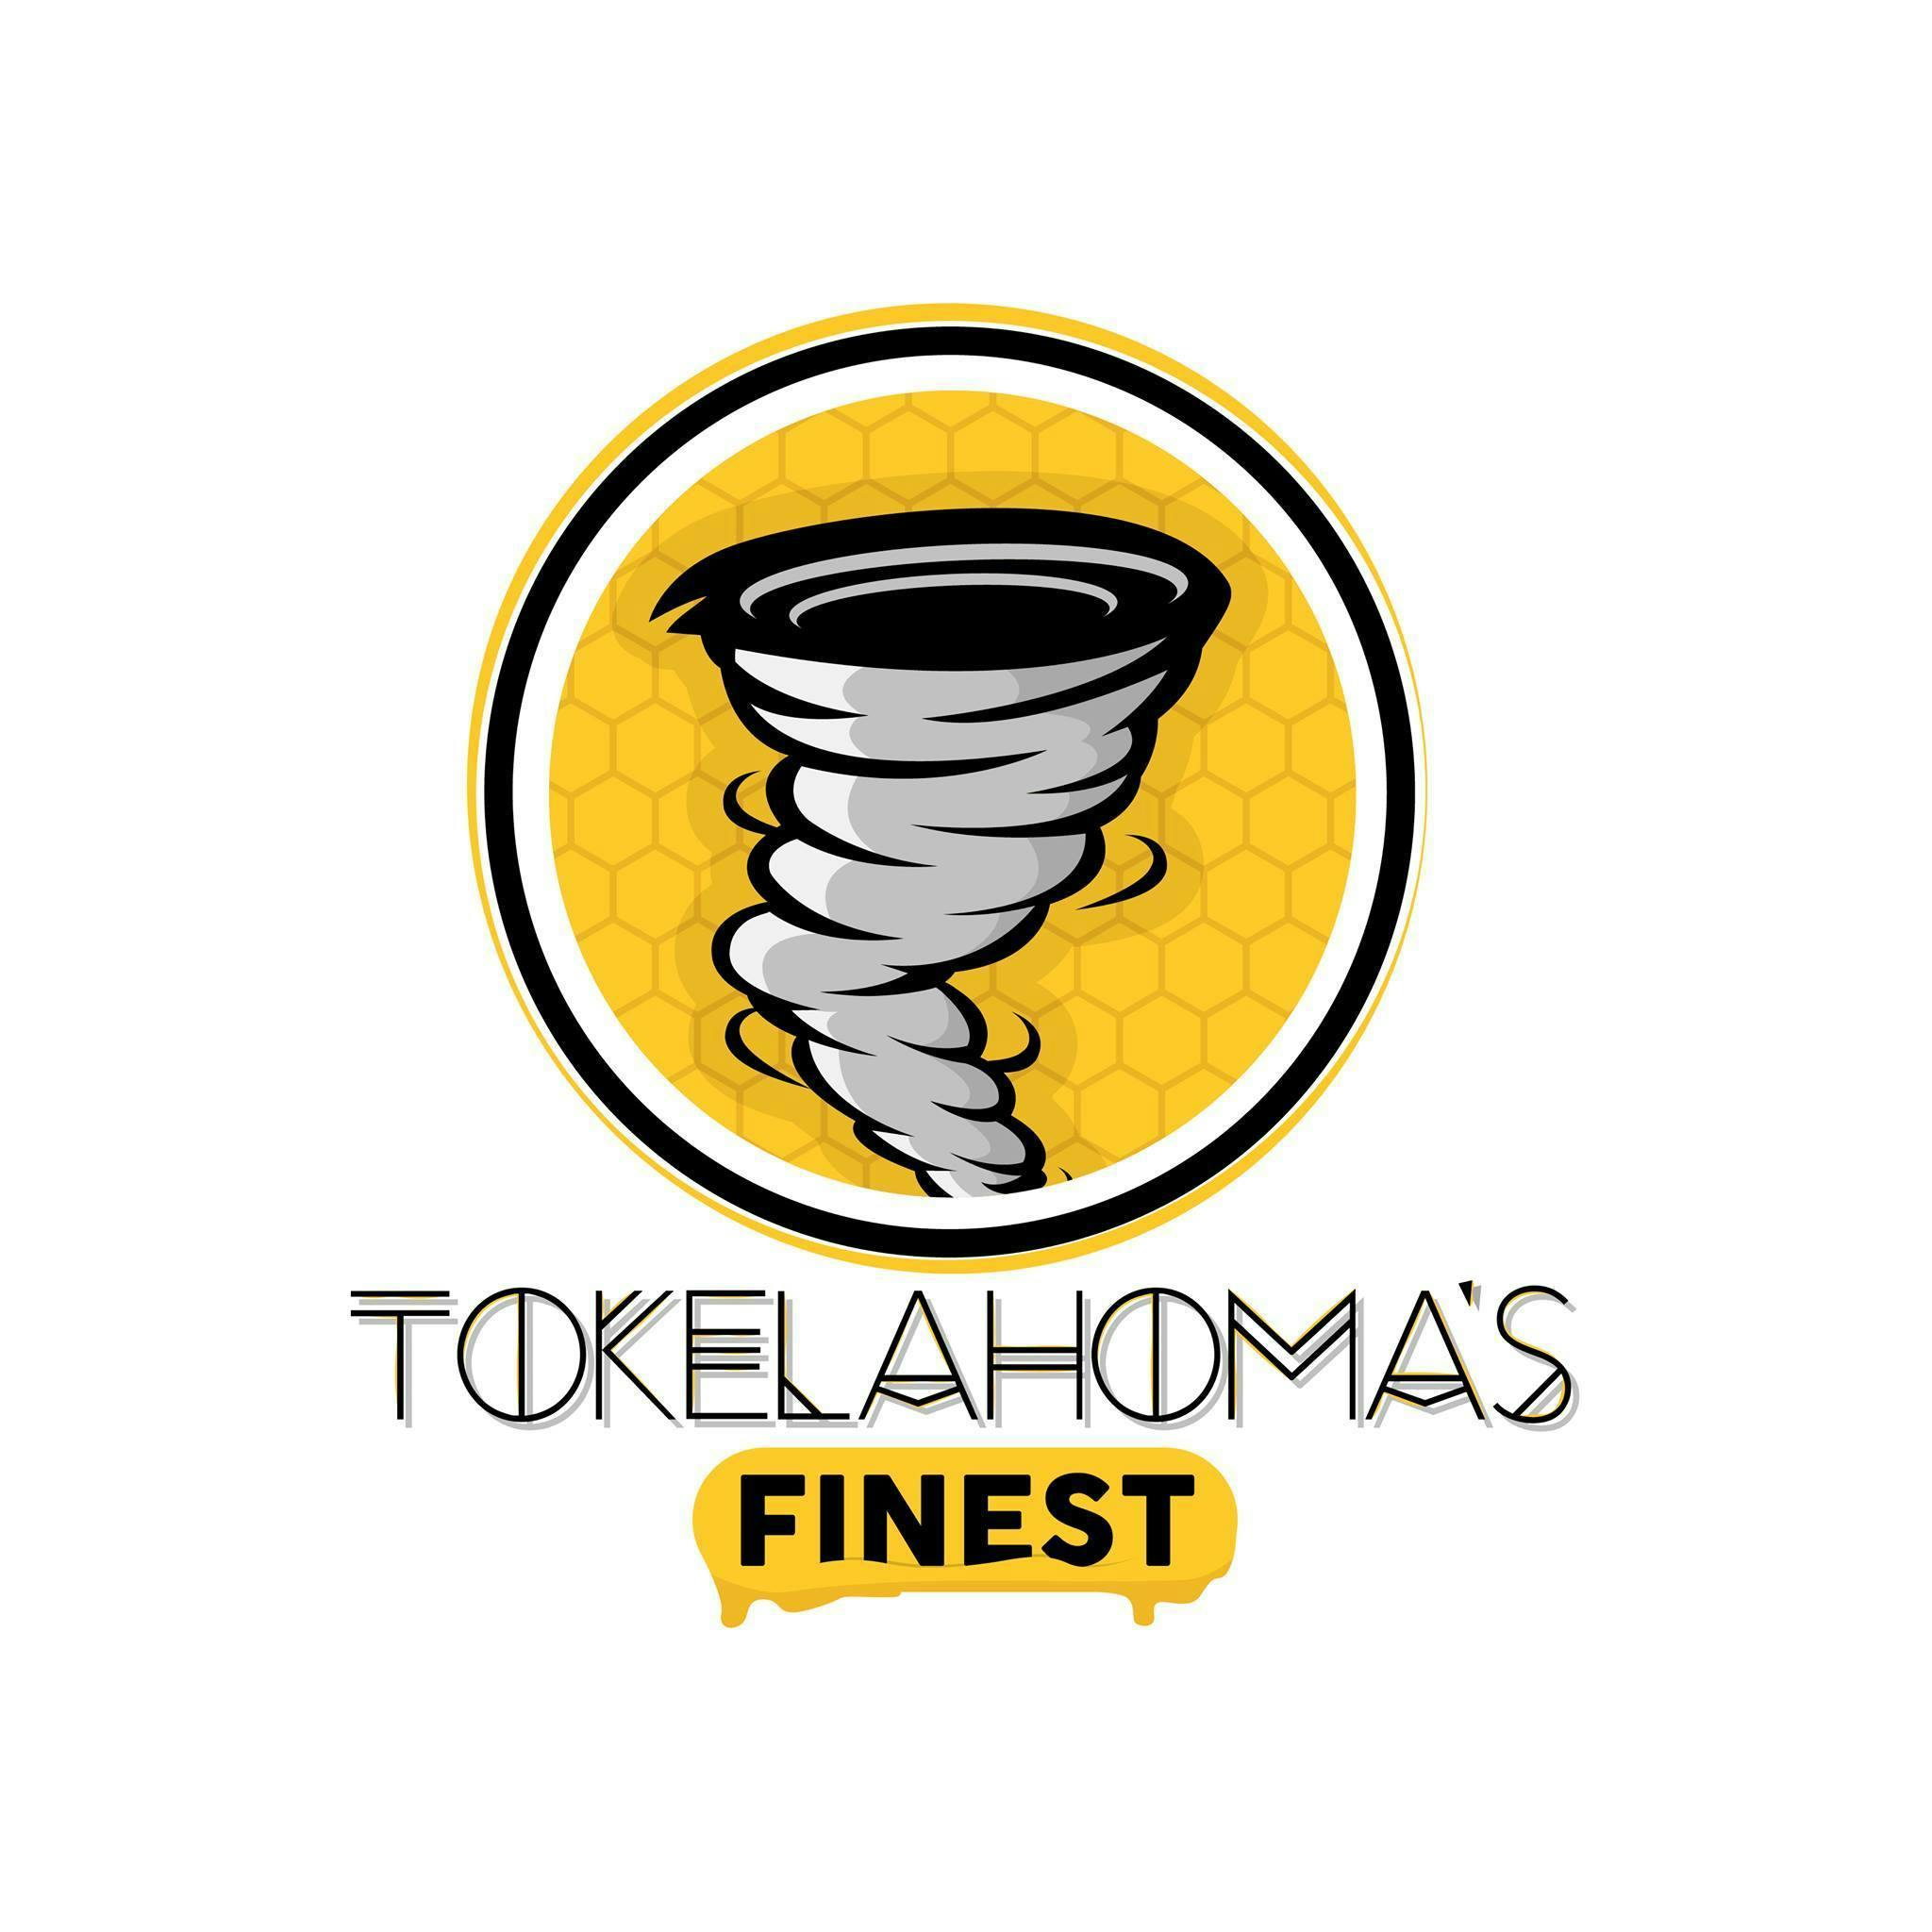 Tokelahoma’s Finest - Norman Dispensary